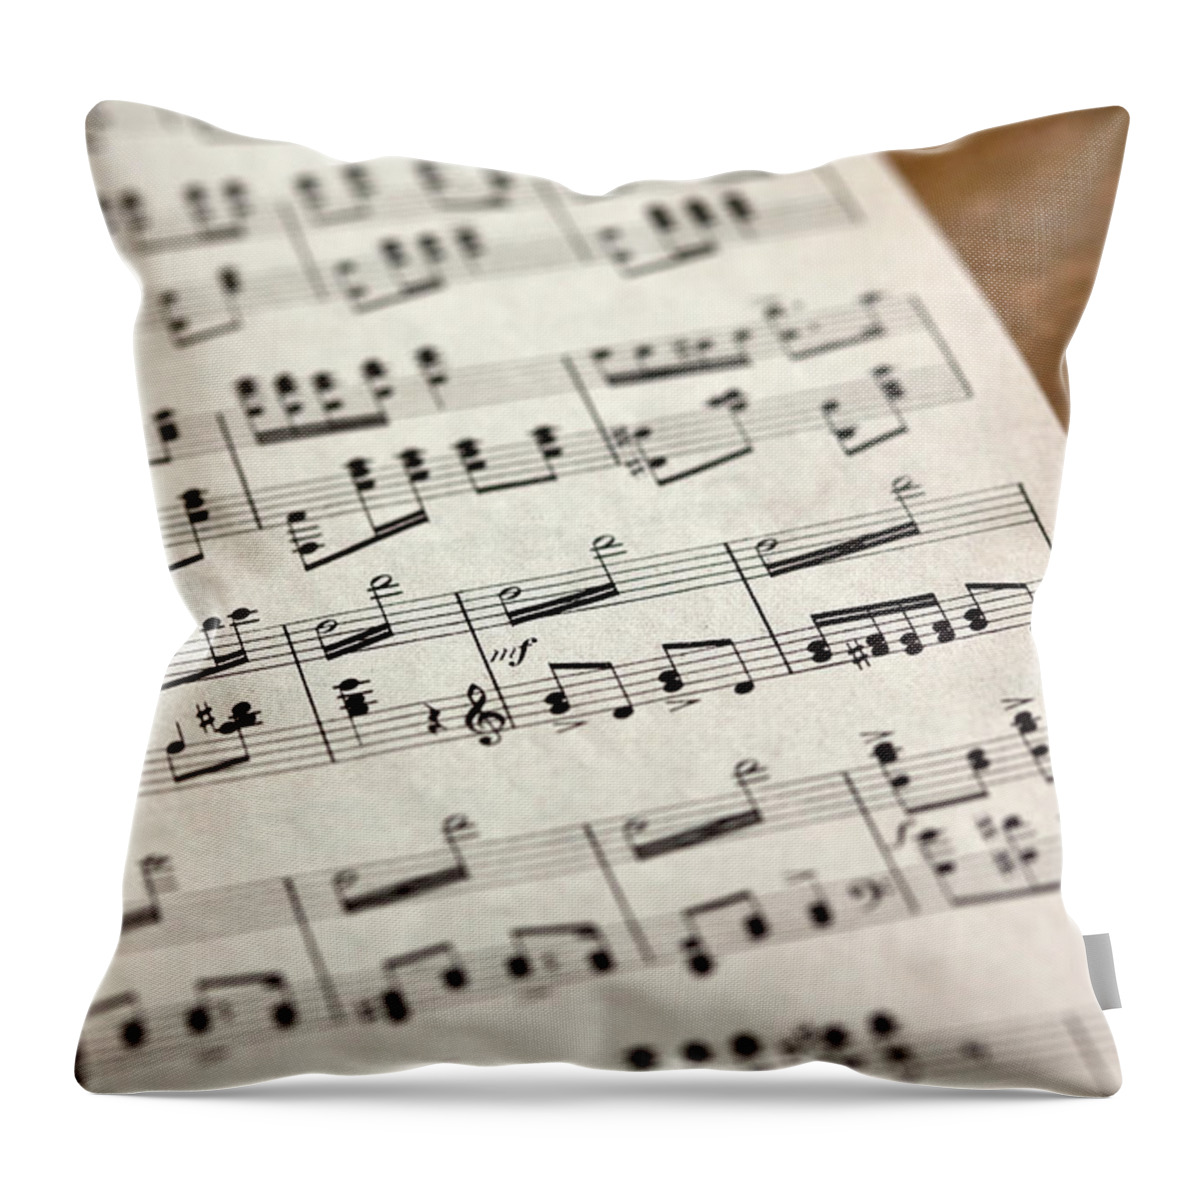 Sheet Music Throw Pillow featuring the photograph Sheet Music by Ursula Alter